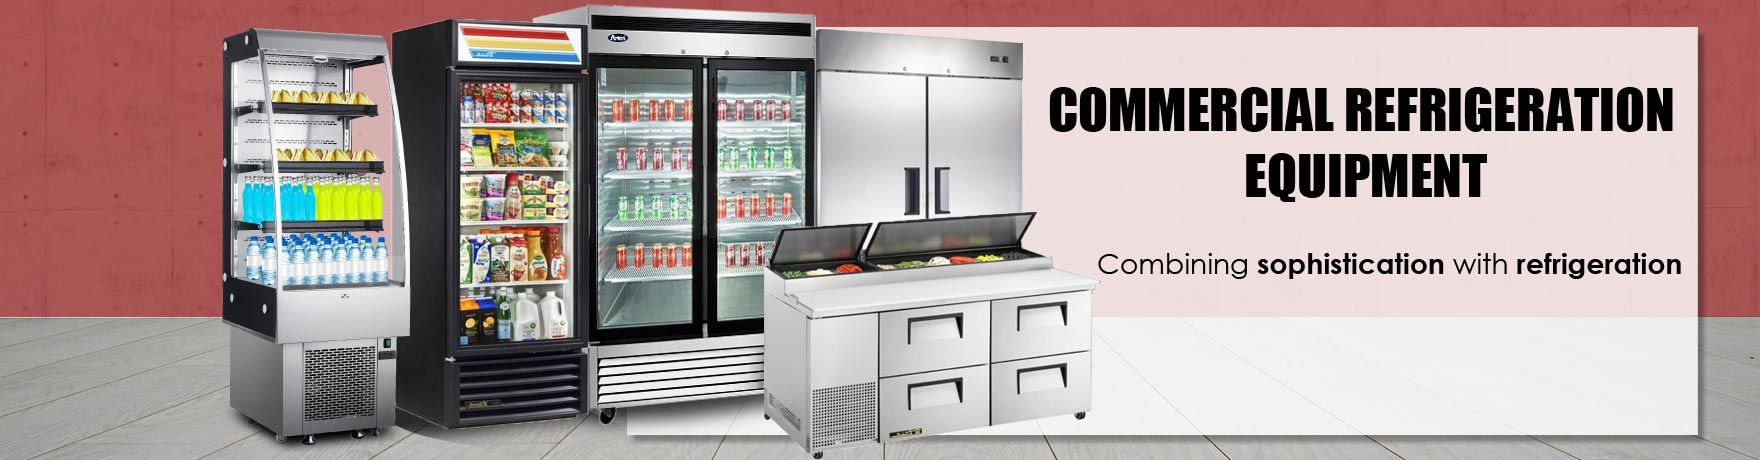 Restaurant Refrigeration Equipment And Supplies Canada Zanduco Ca